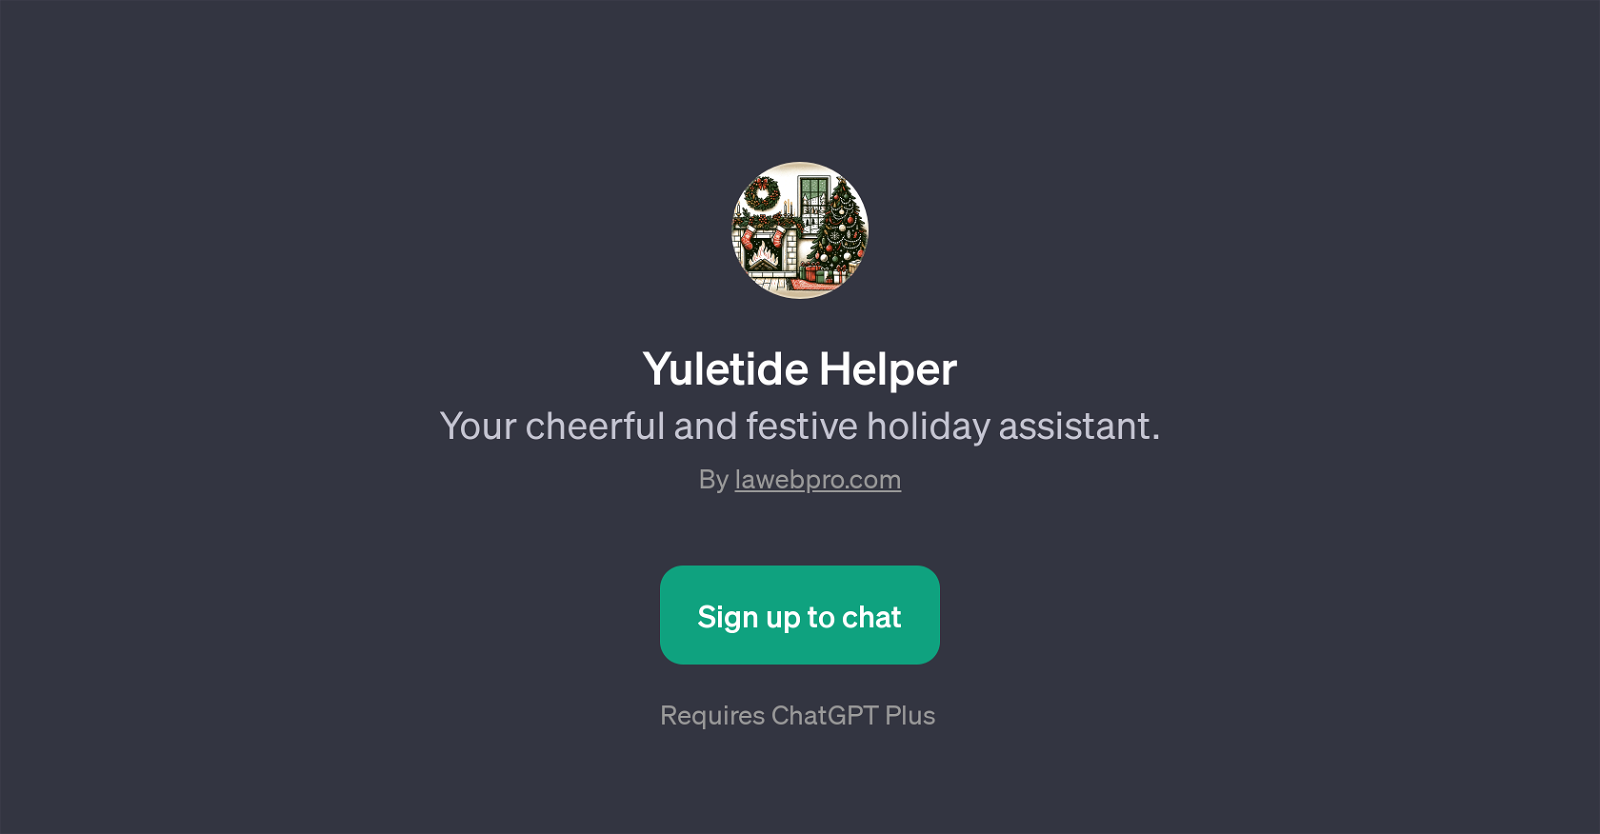 Yuletide Helper website